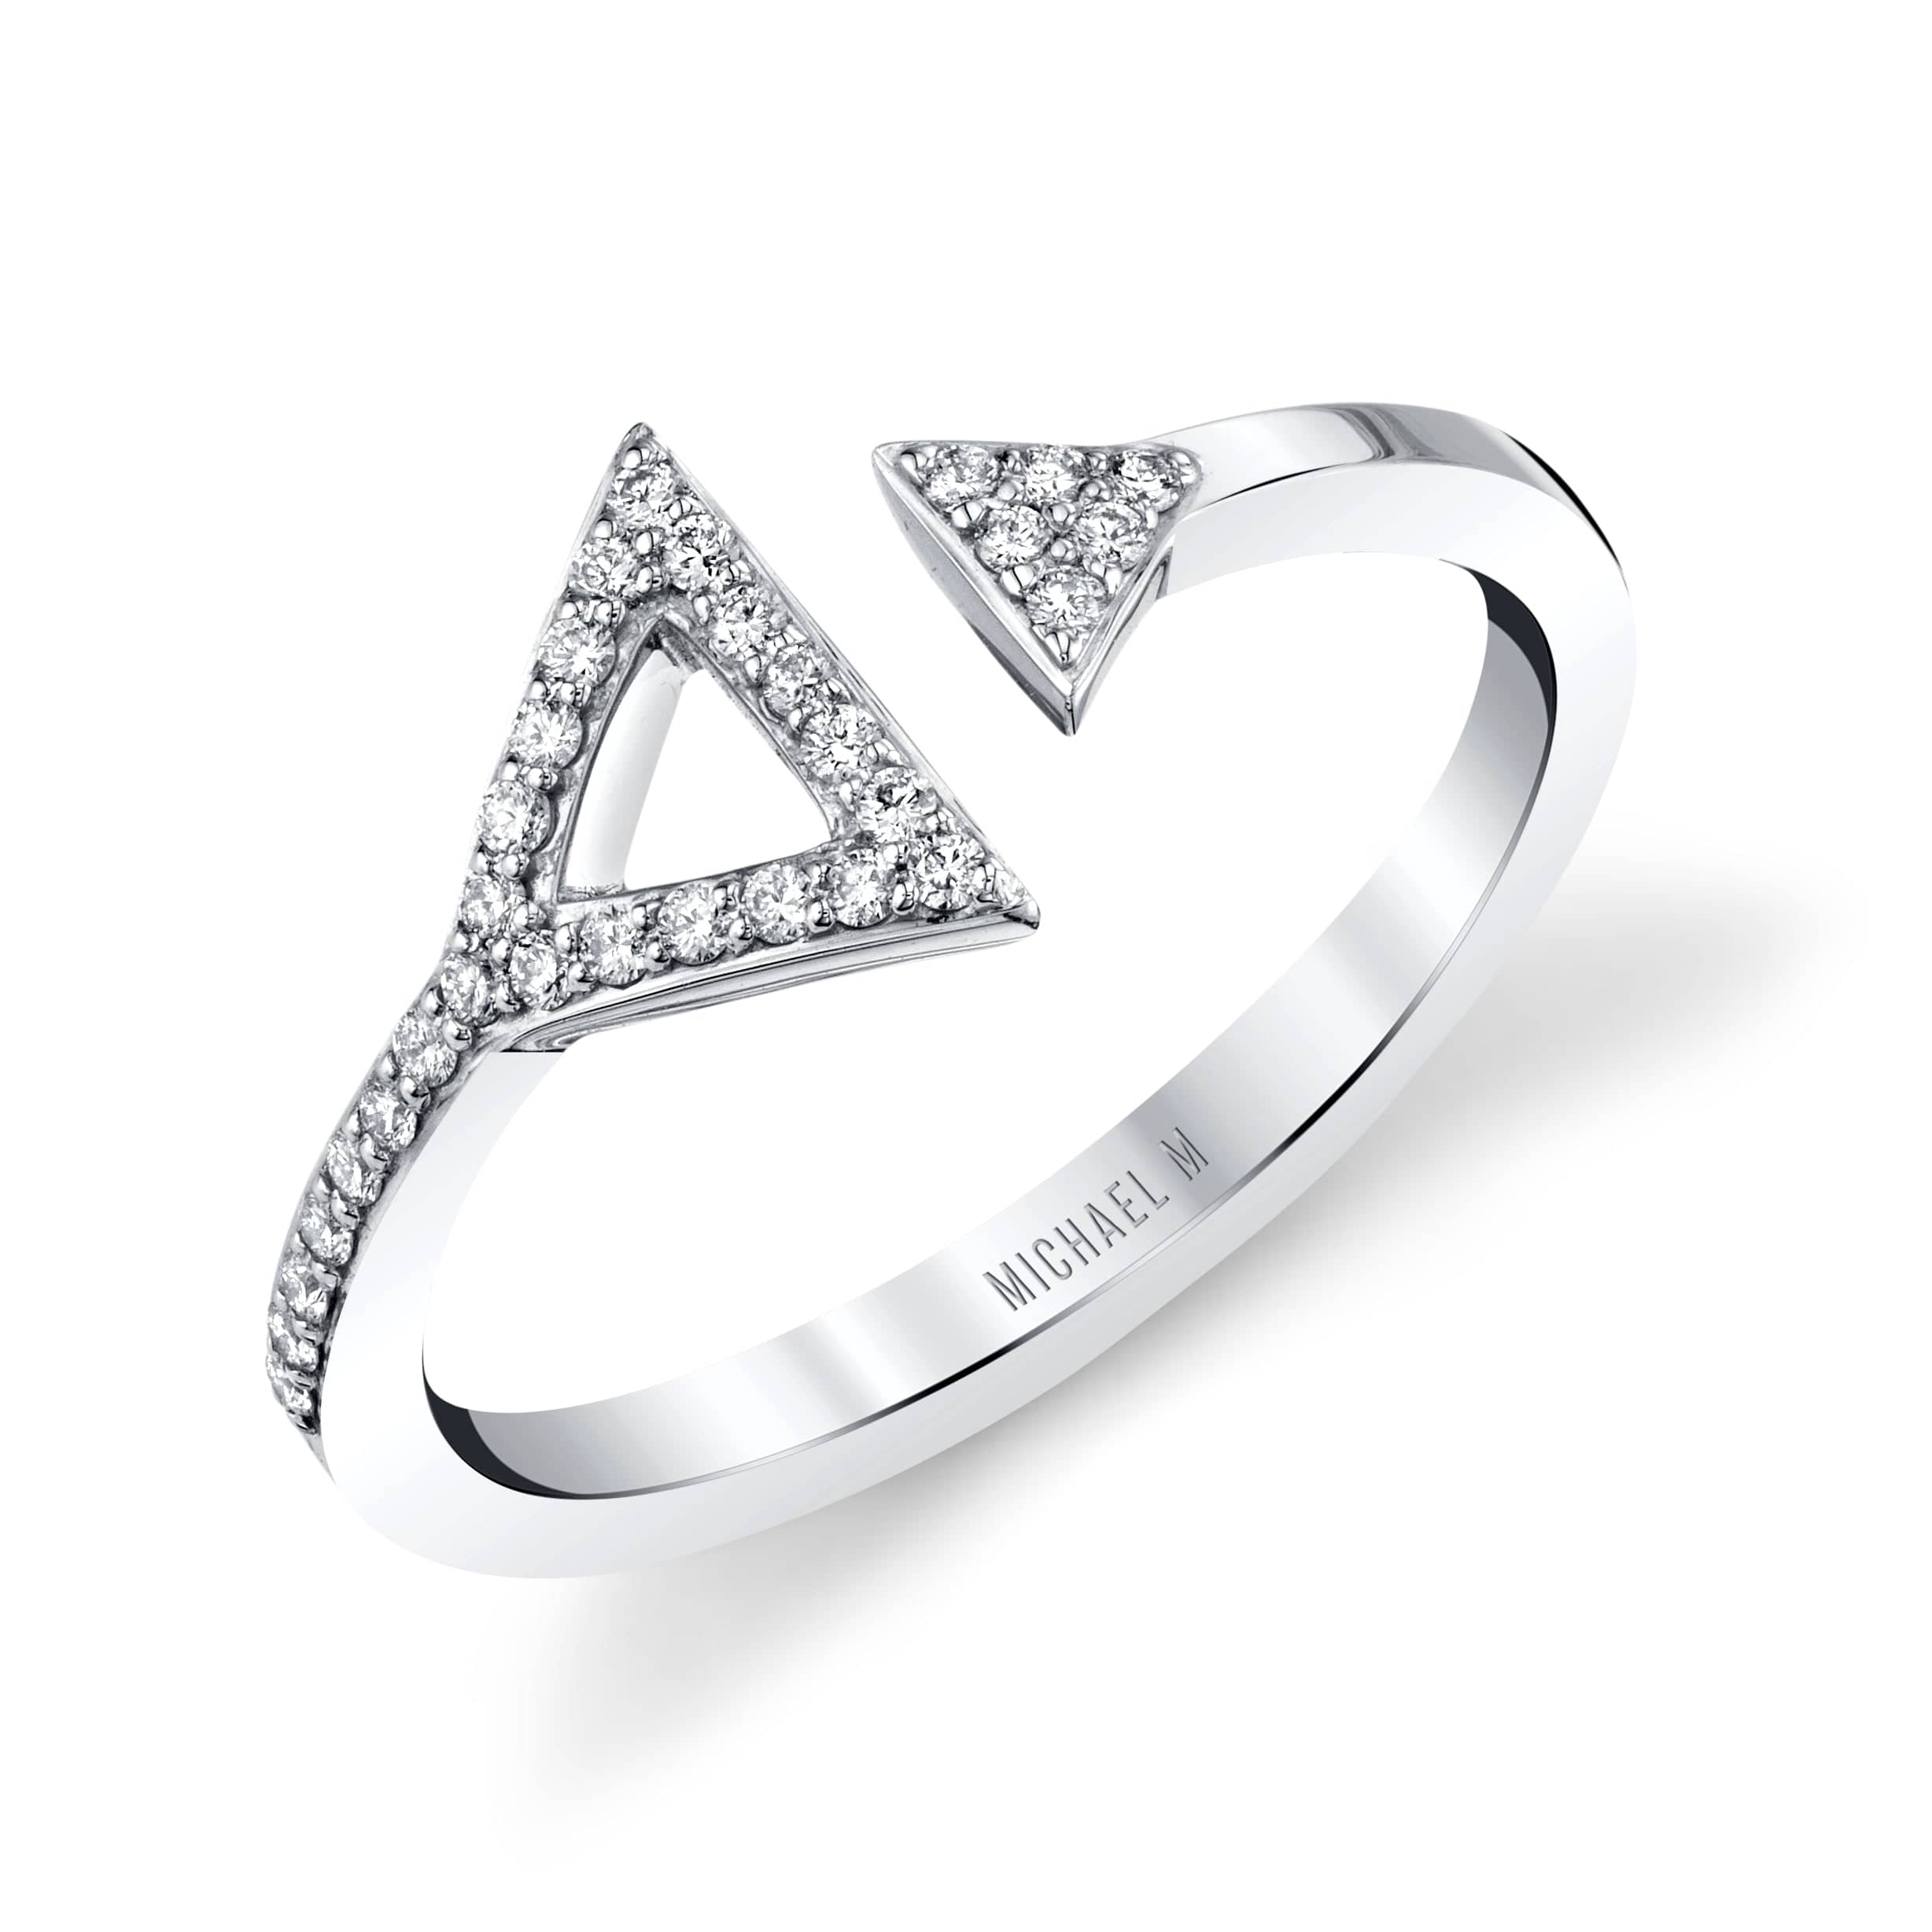 MICHAEL M Fashion Rings 14K White Gold / 4 Double Diamond Triangle Ring F315-WG4